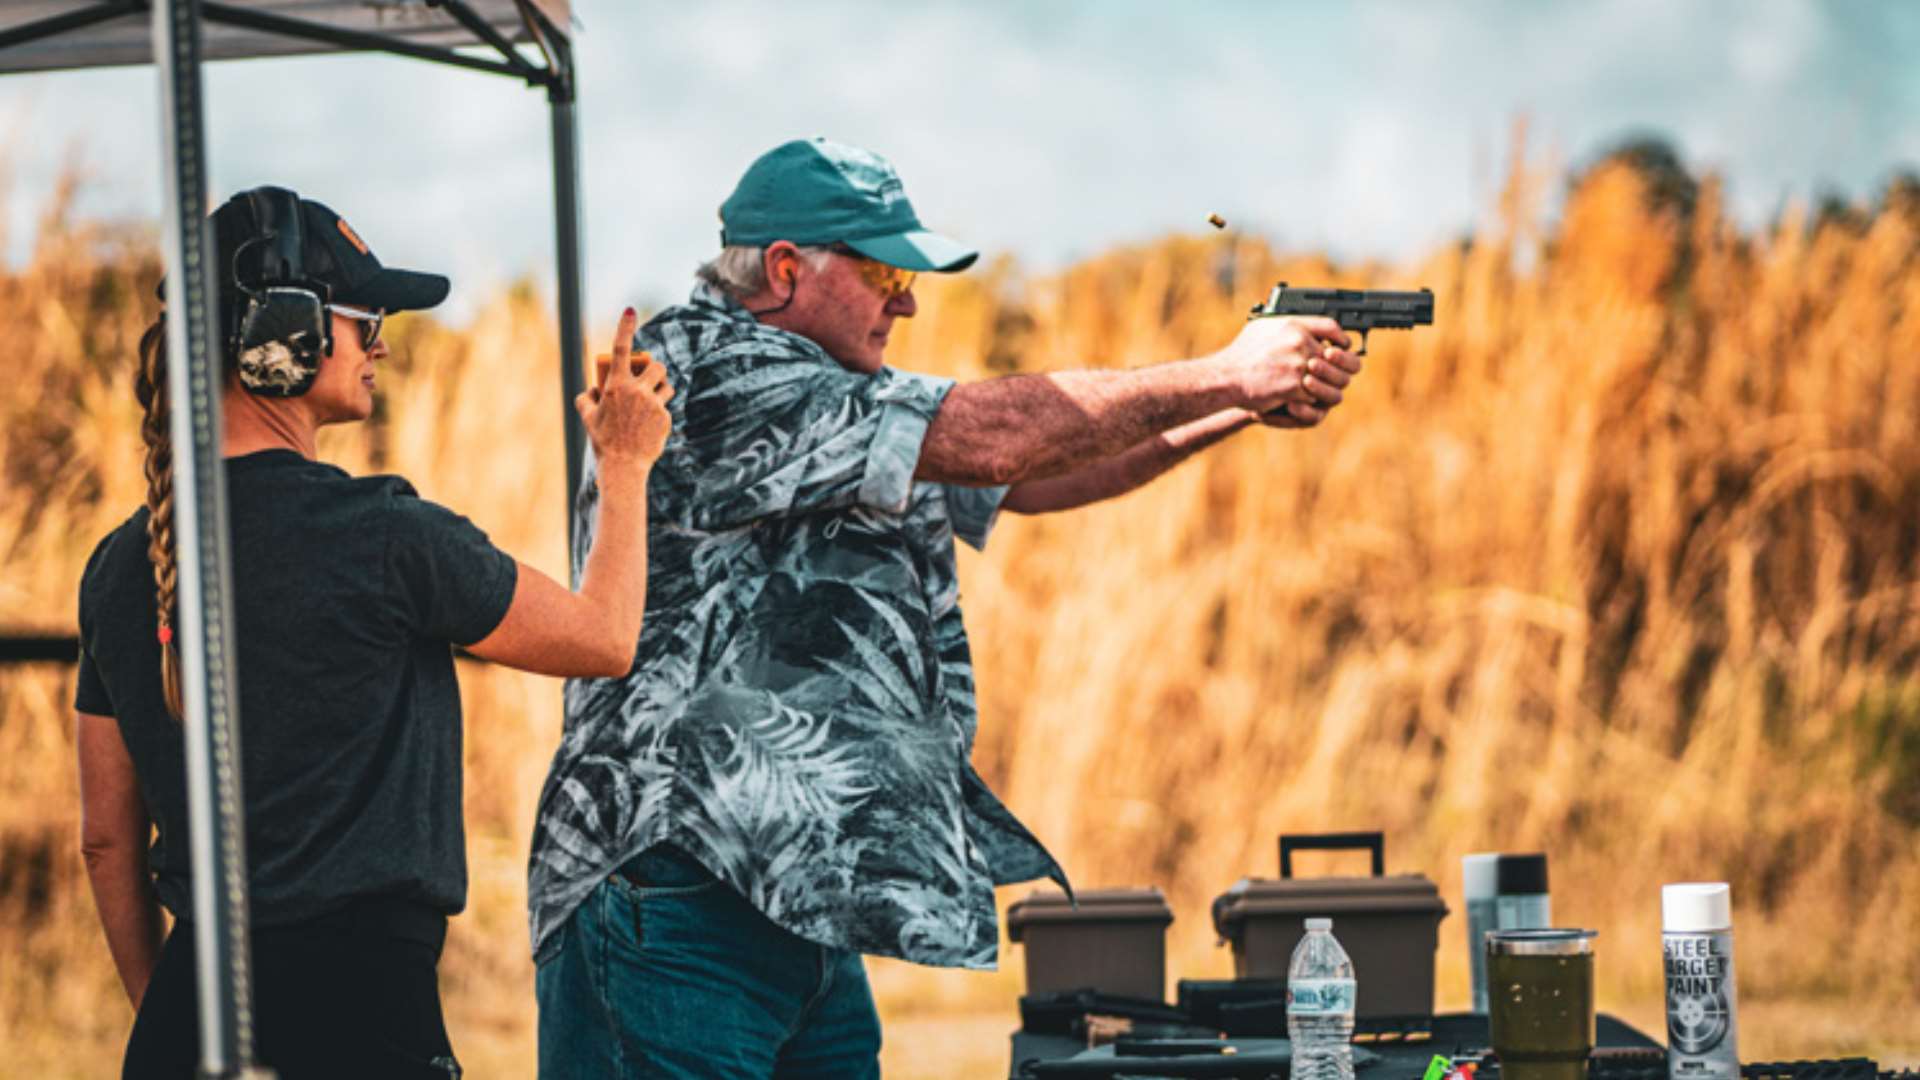 Steven Sager shooting pistol